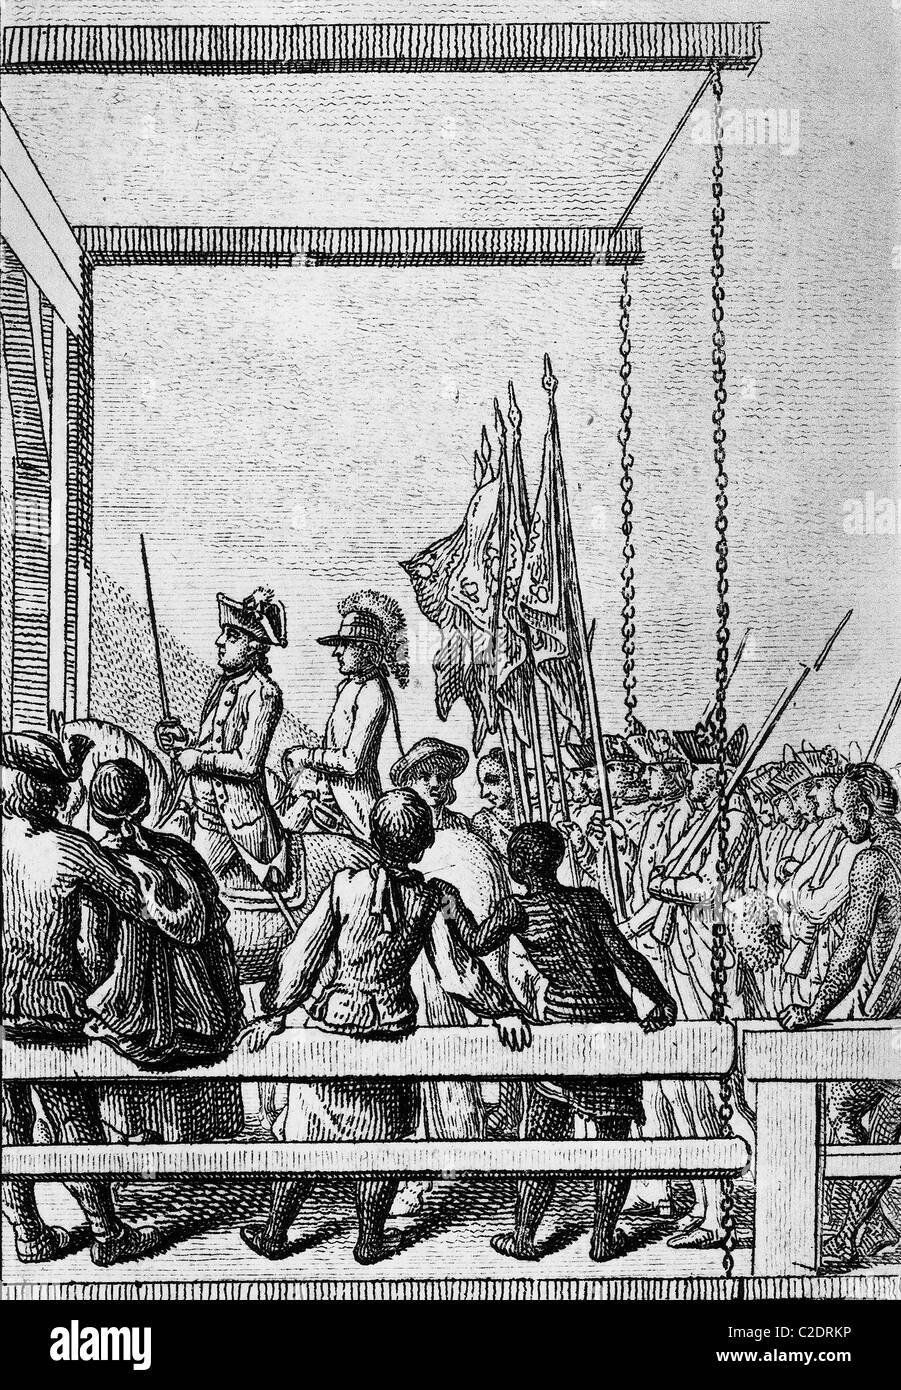 Hessian troops captured at Trenton Stock Photo